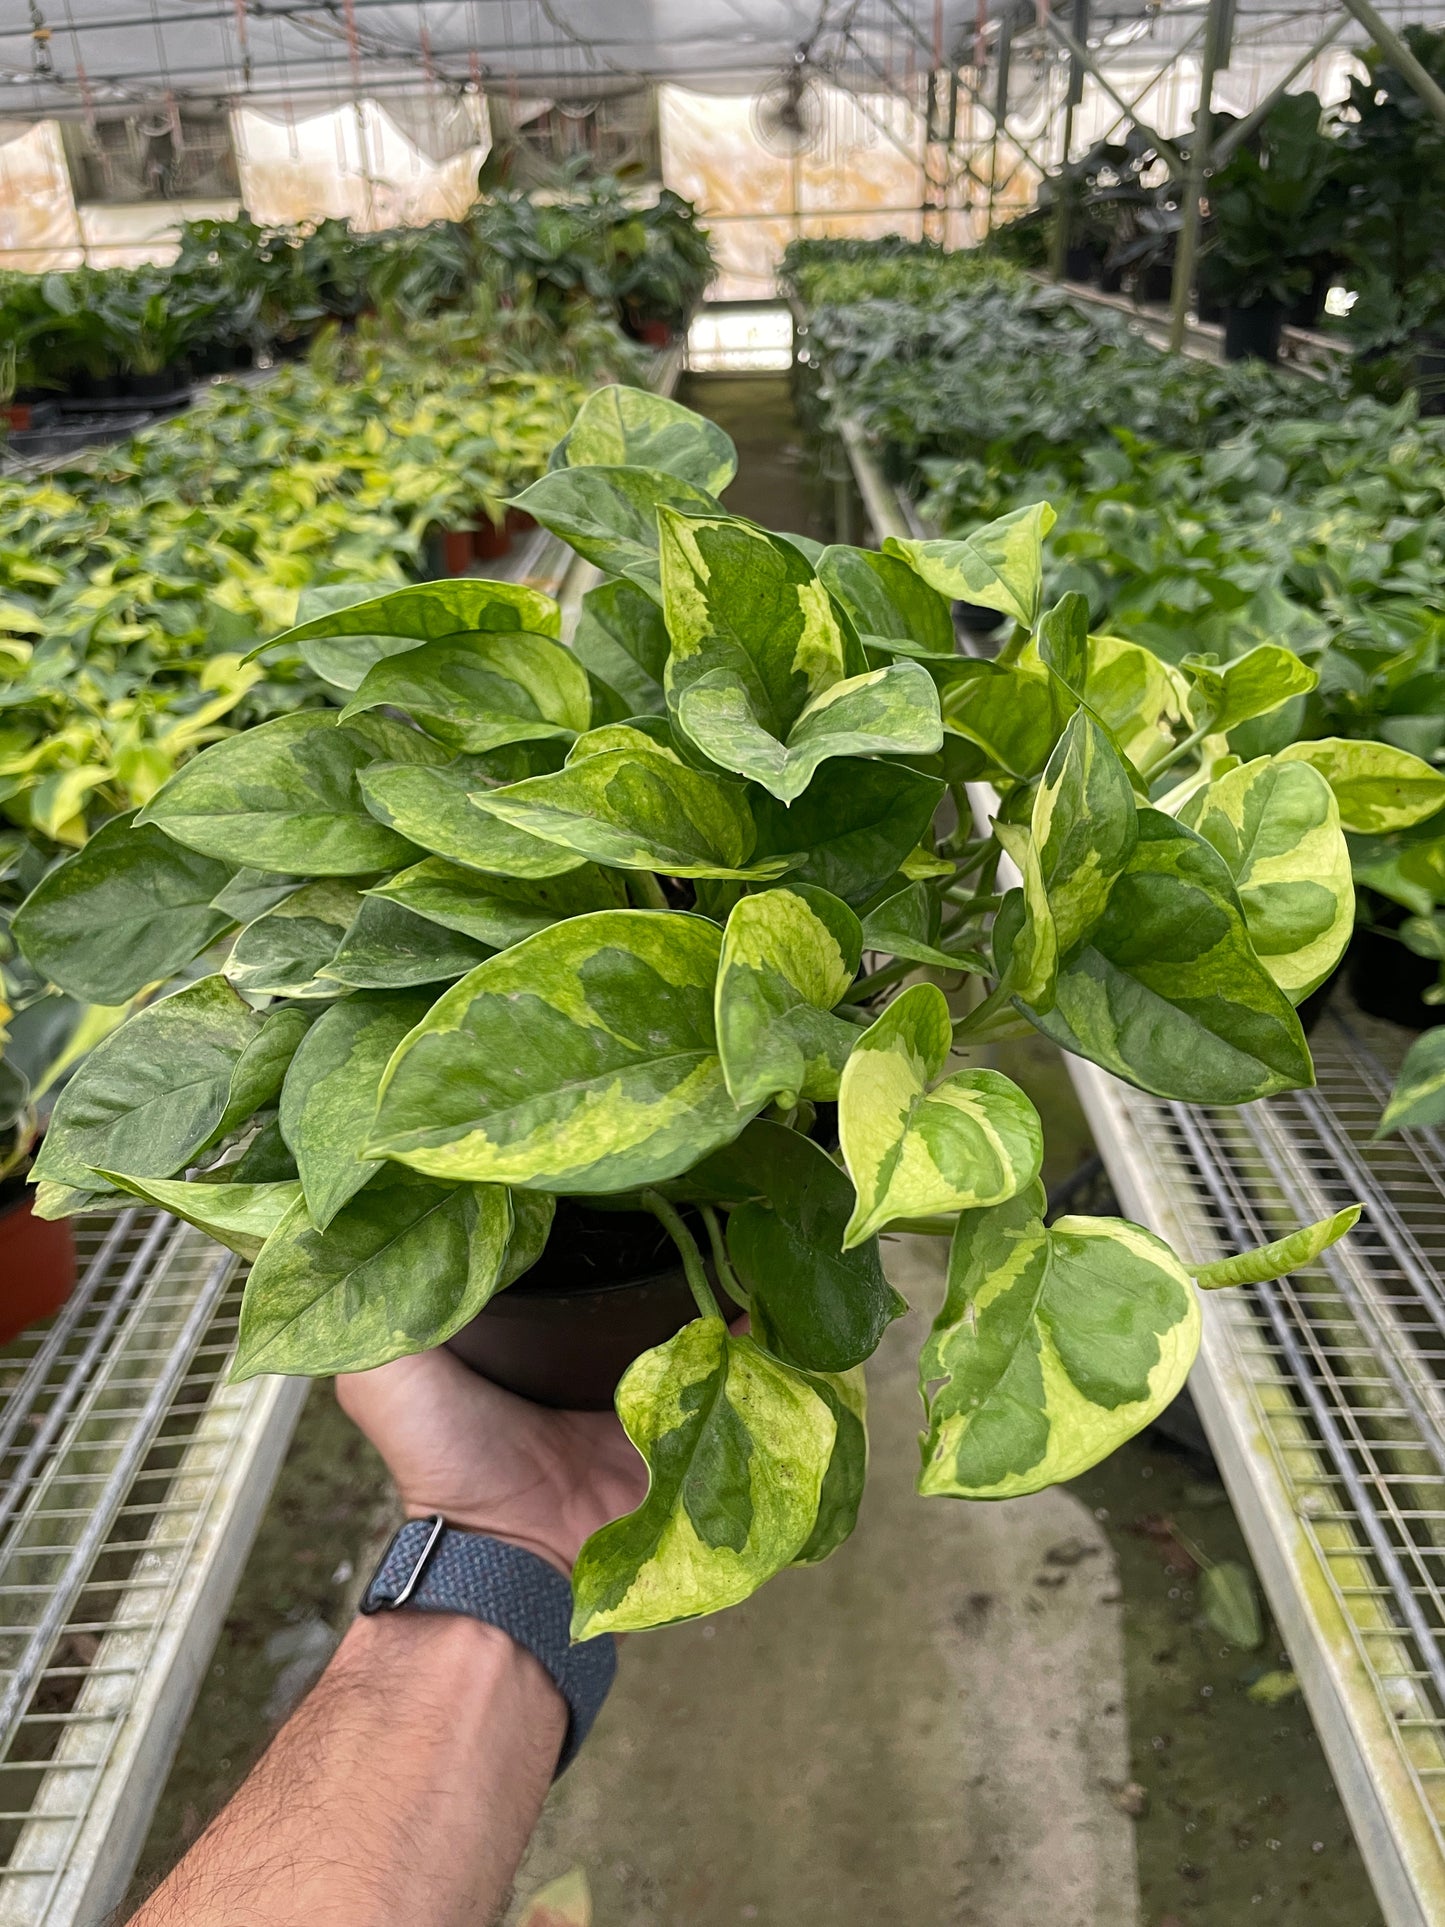 Epiprenmum Aureum 'Lemon Meringue' Pothos- 🌱 Beginner-Friendly, Low Maintenance, Beautiful Small Green Leaves With Vibrant Gold Variegation- (6 Inch Nursery Pot)